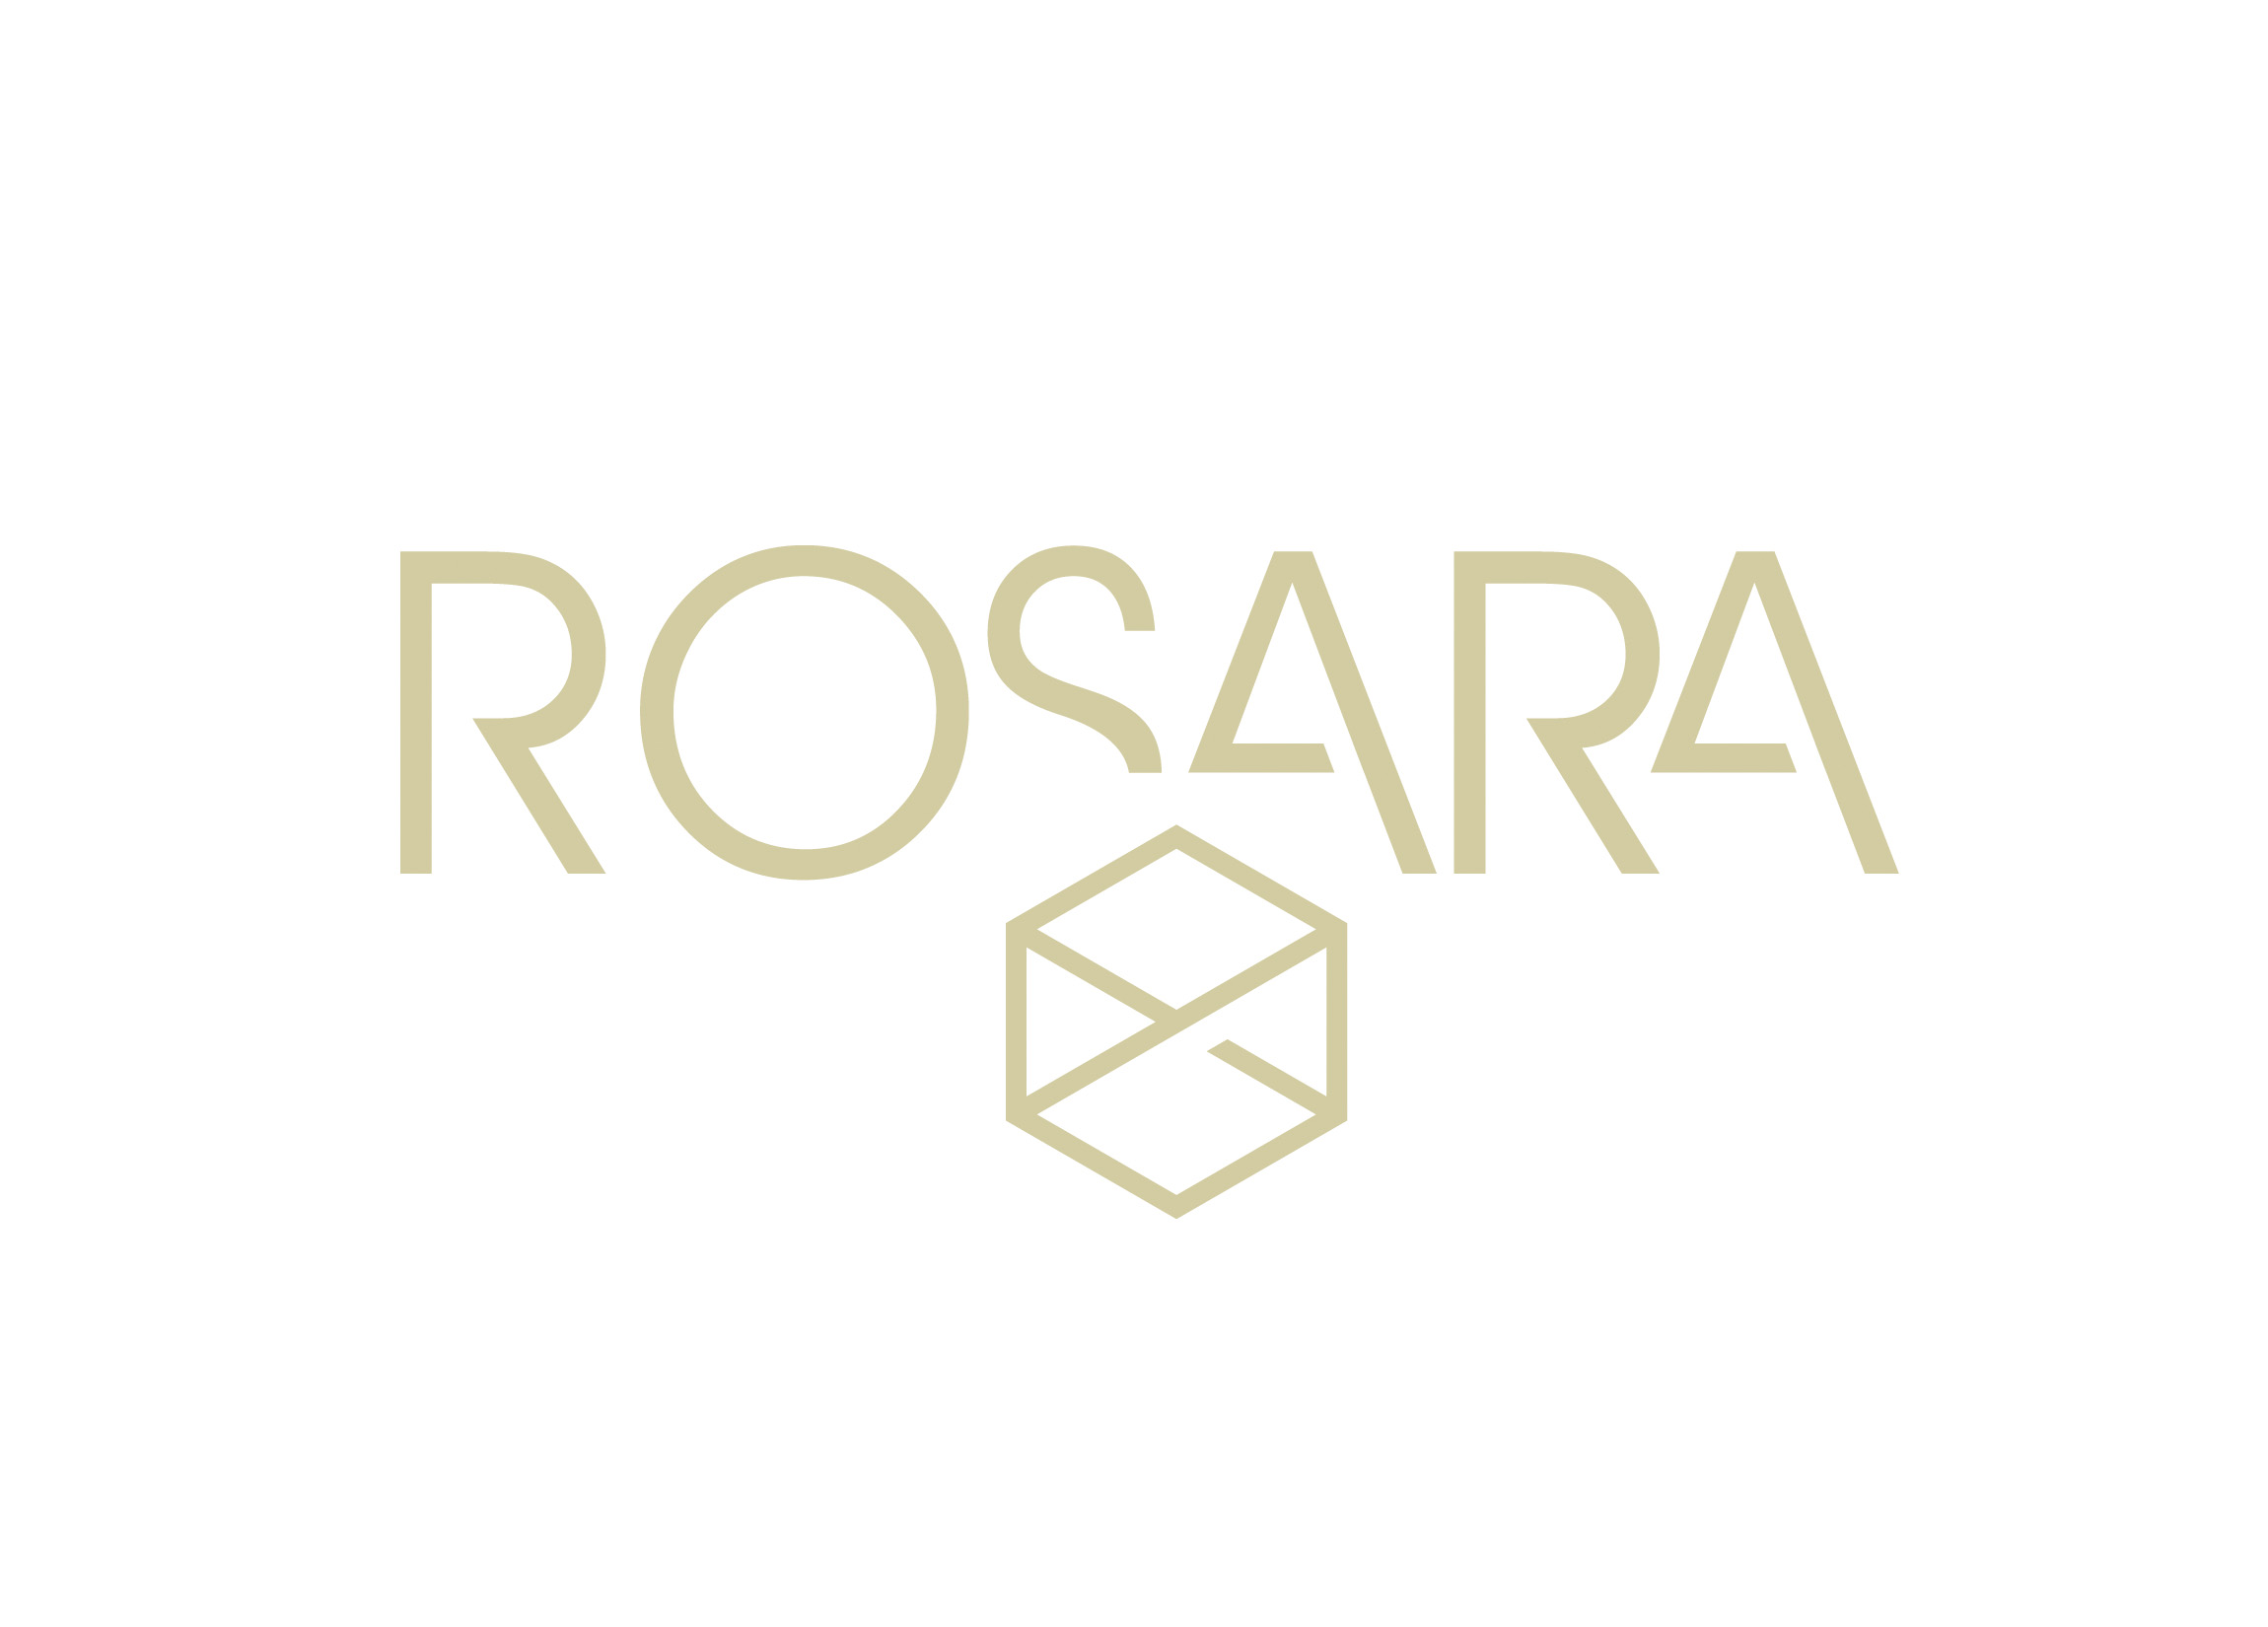 Rosara_Logos01.jpg